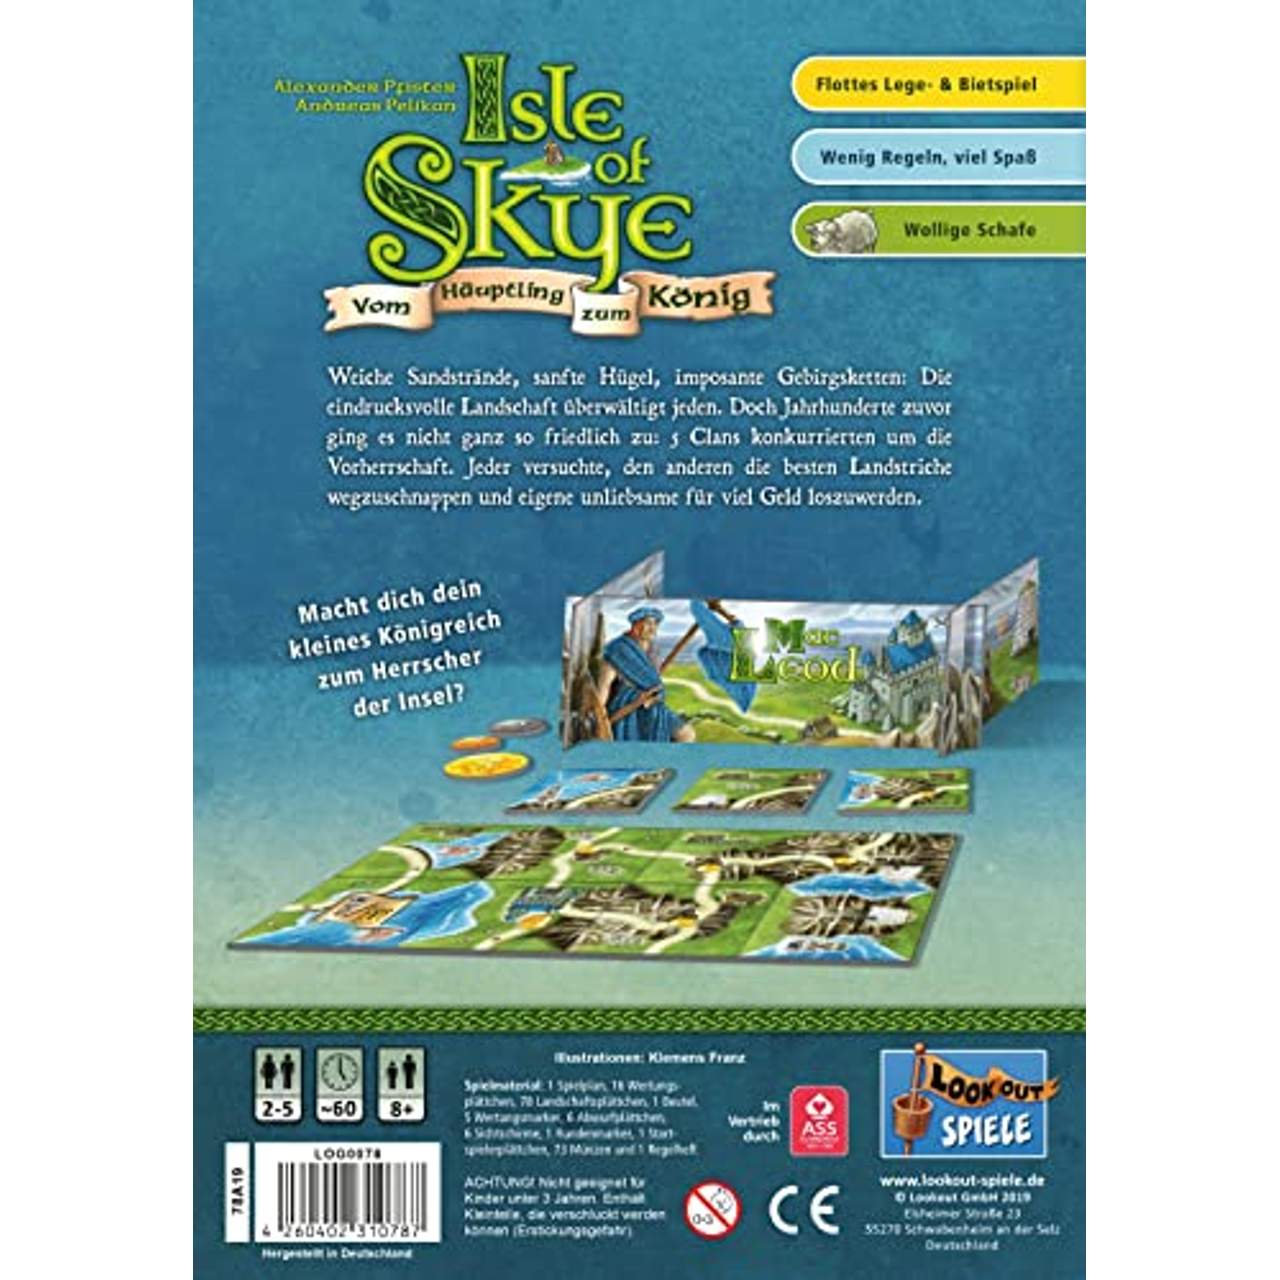 Isle of Skye, Kennerspiel des Jahres 2016